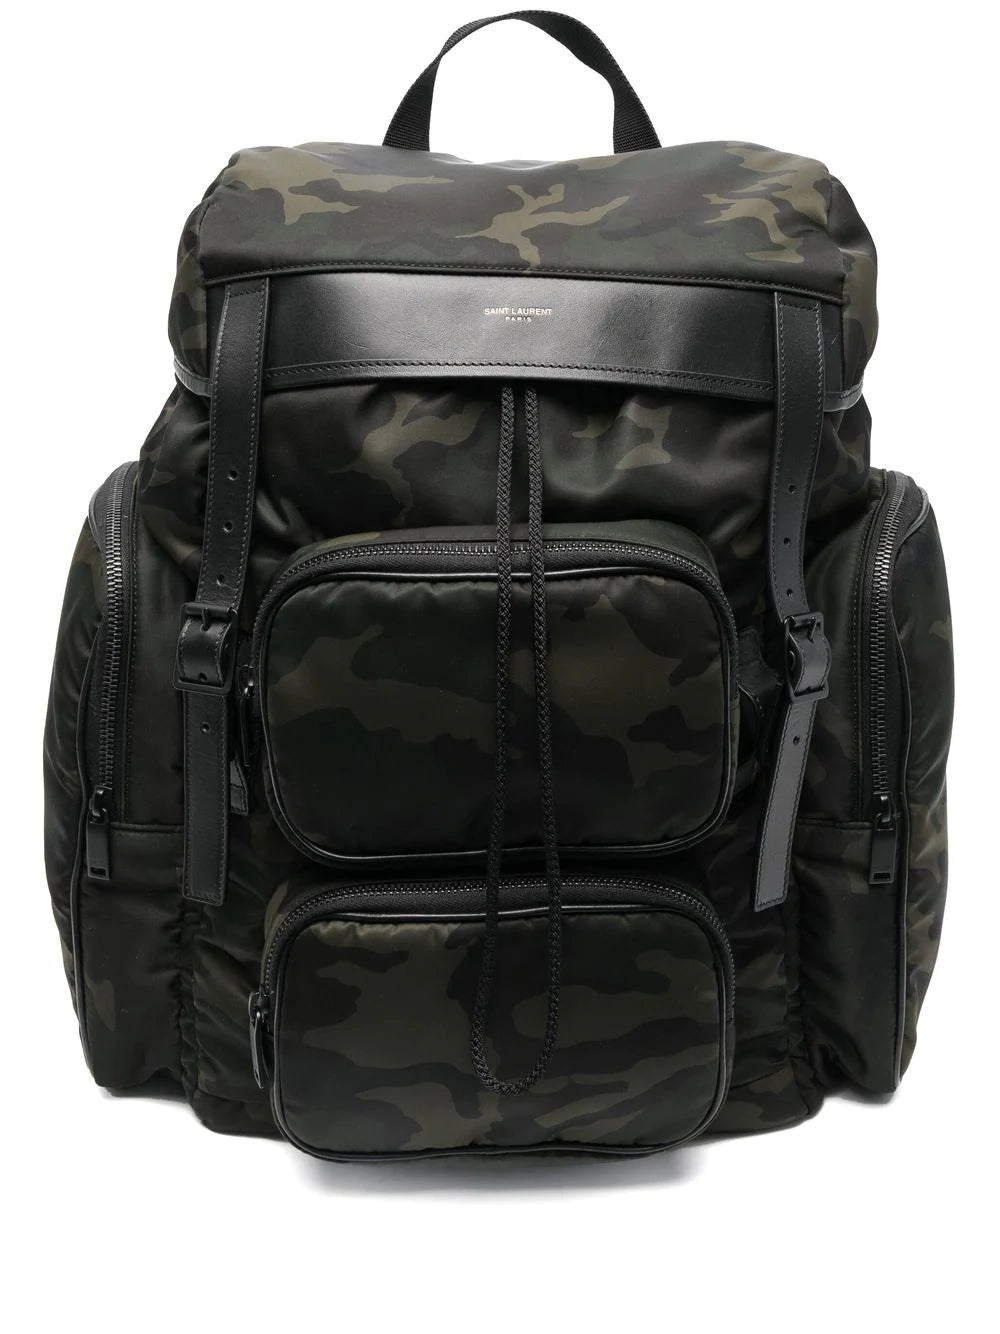 Saint Laurent Hunt camouflage-print backpack